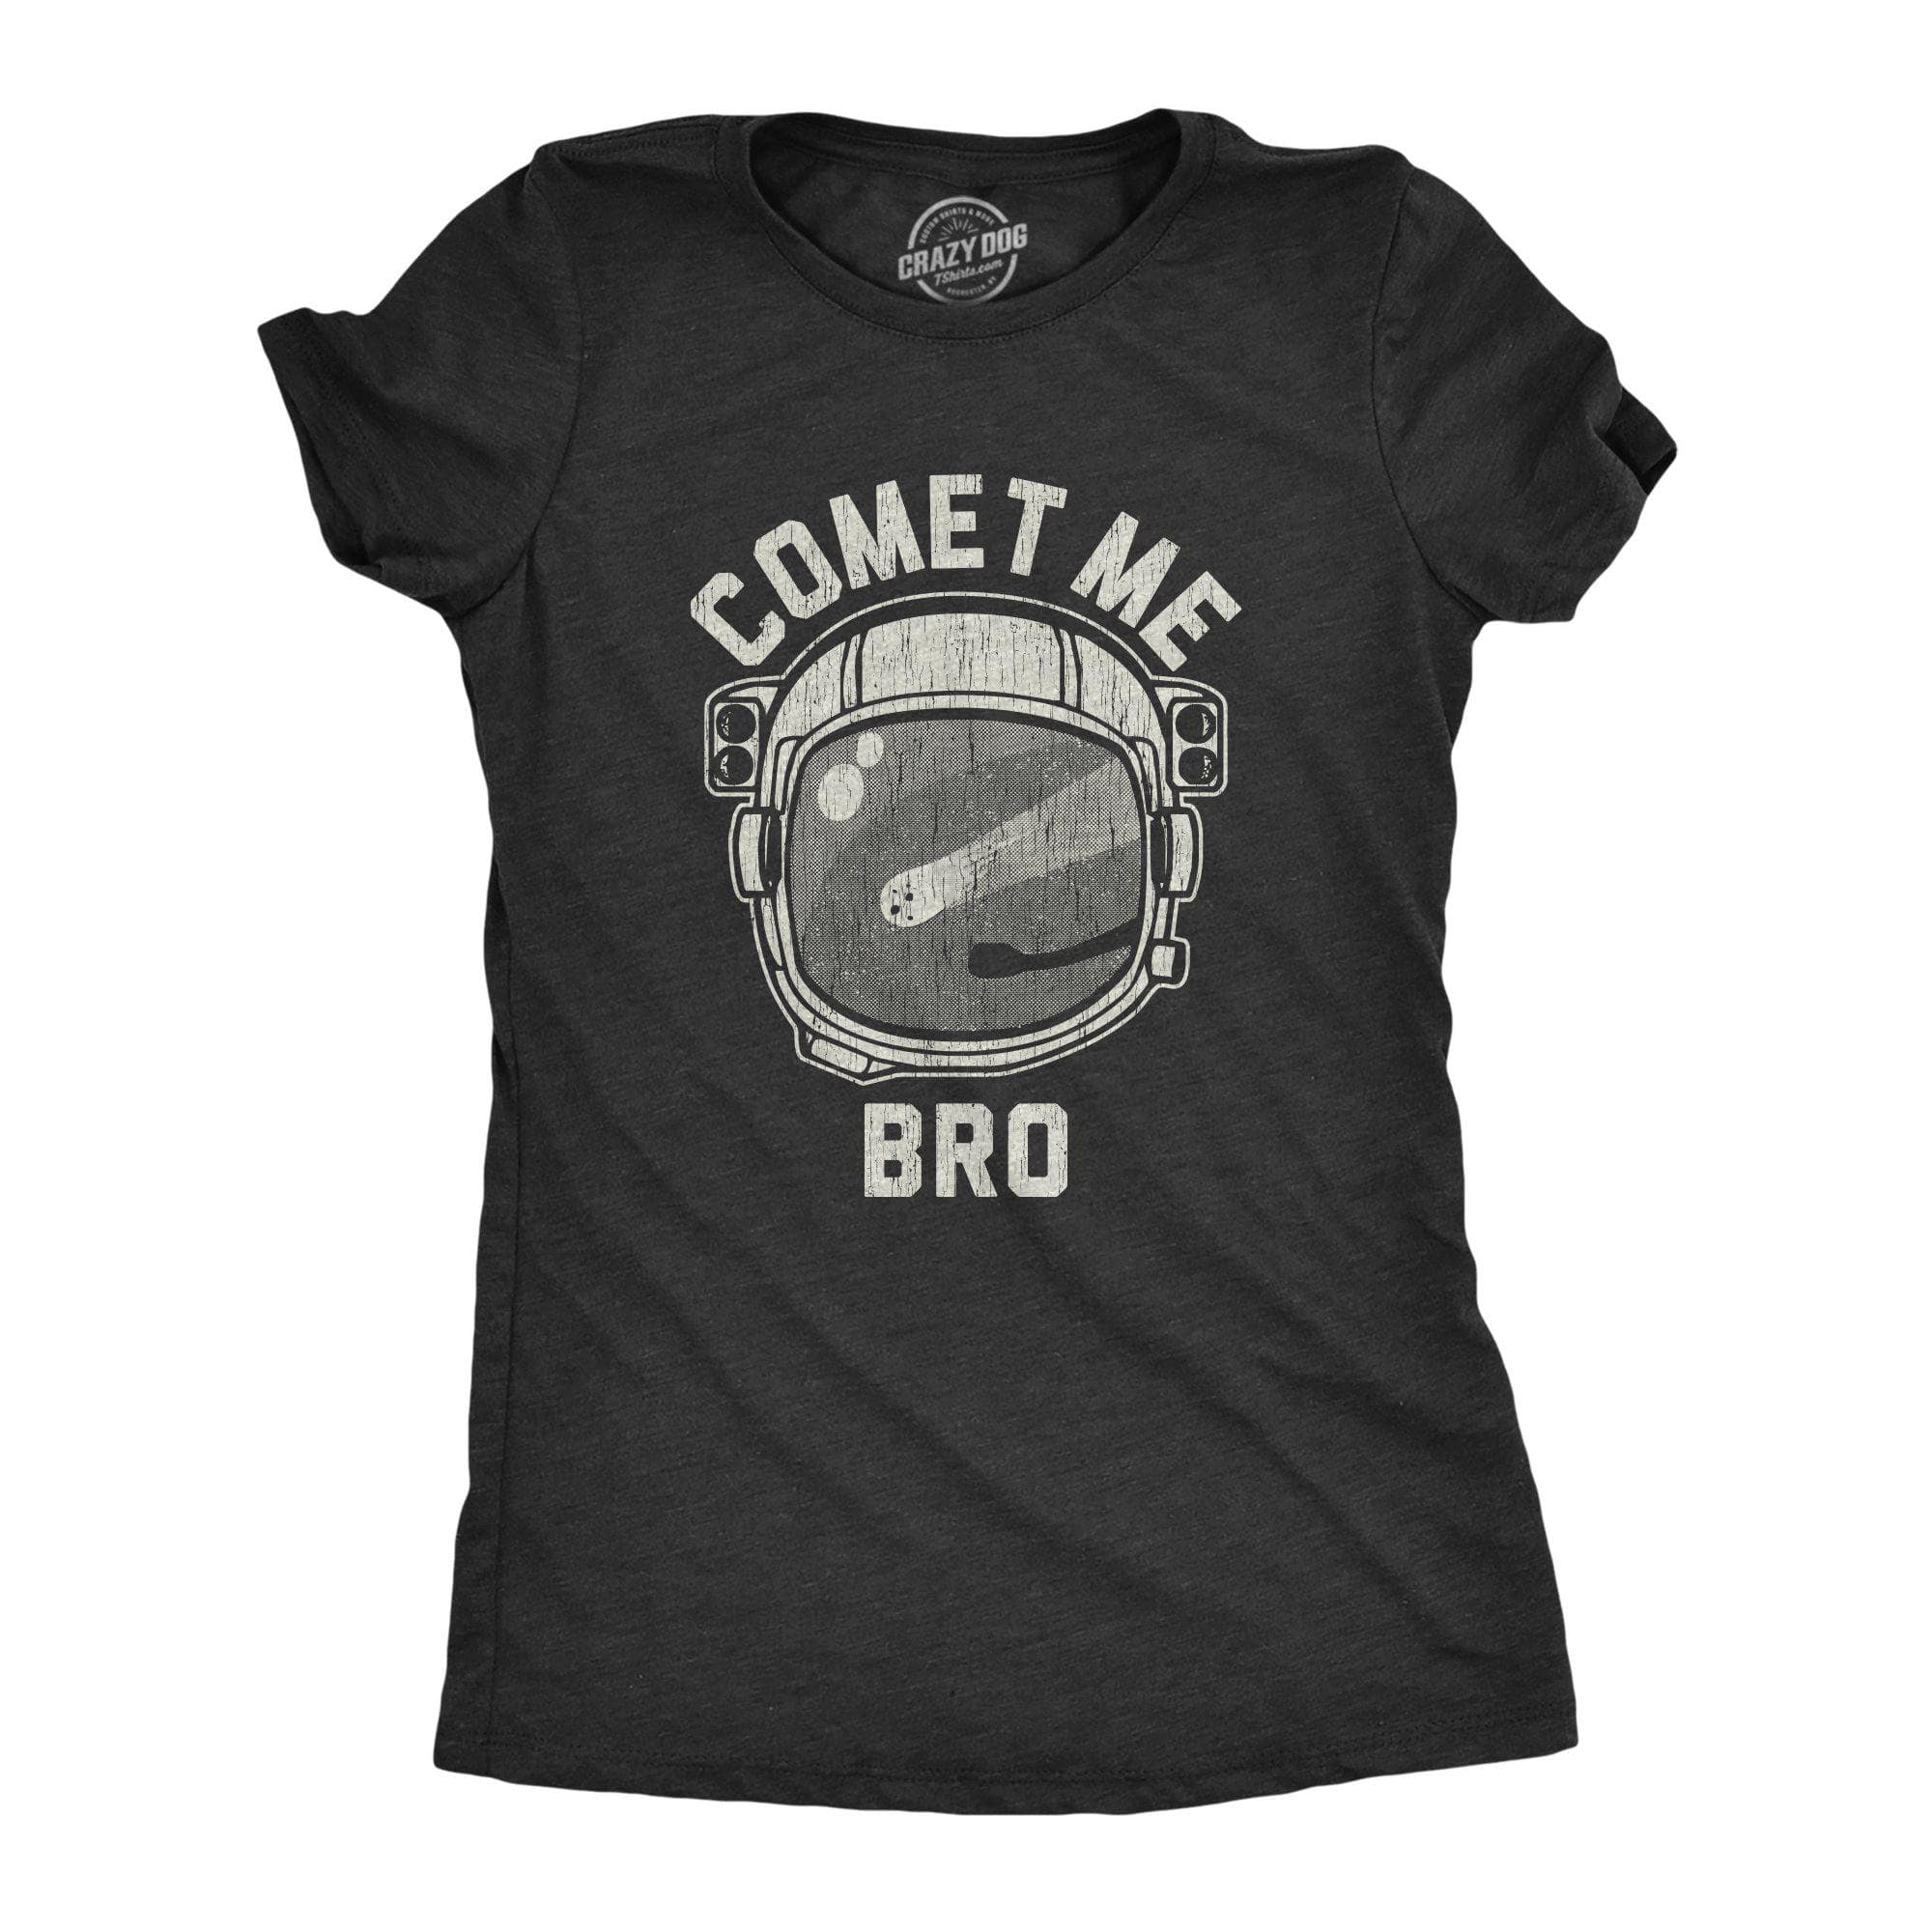 Comet Me Bro Women's Tshirt - Crazy Dog T-Shirts